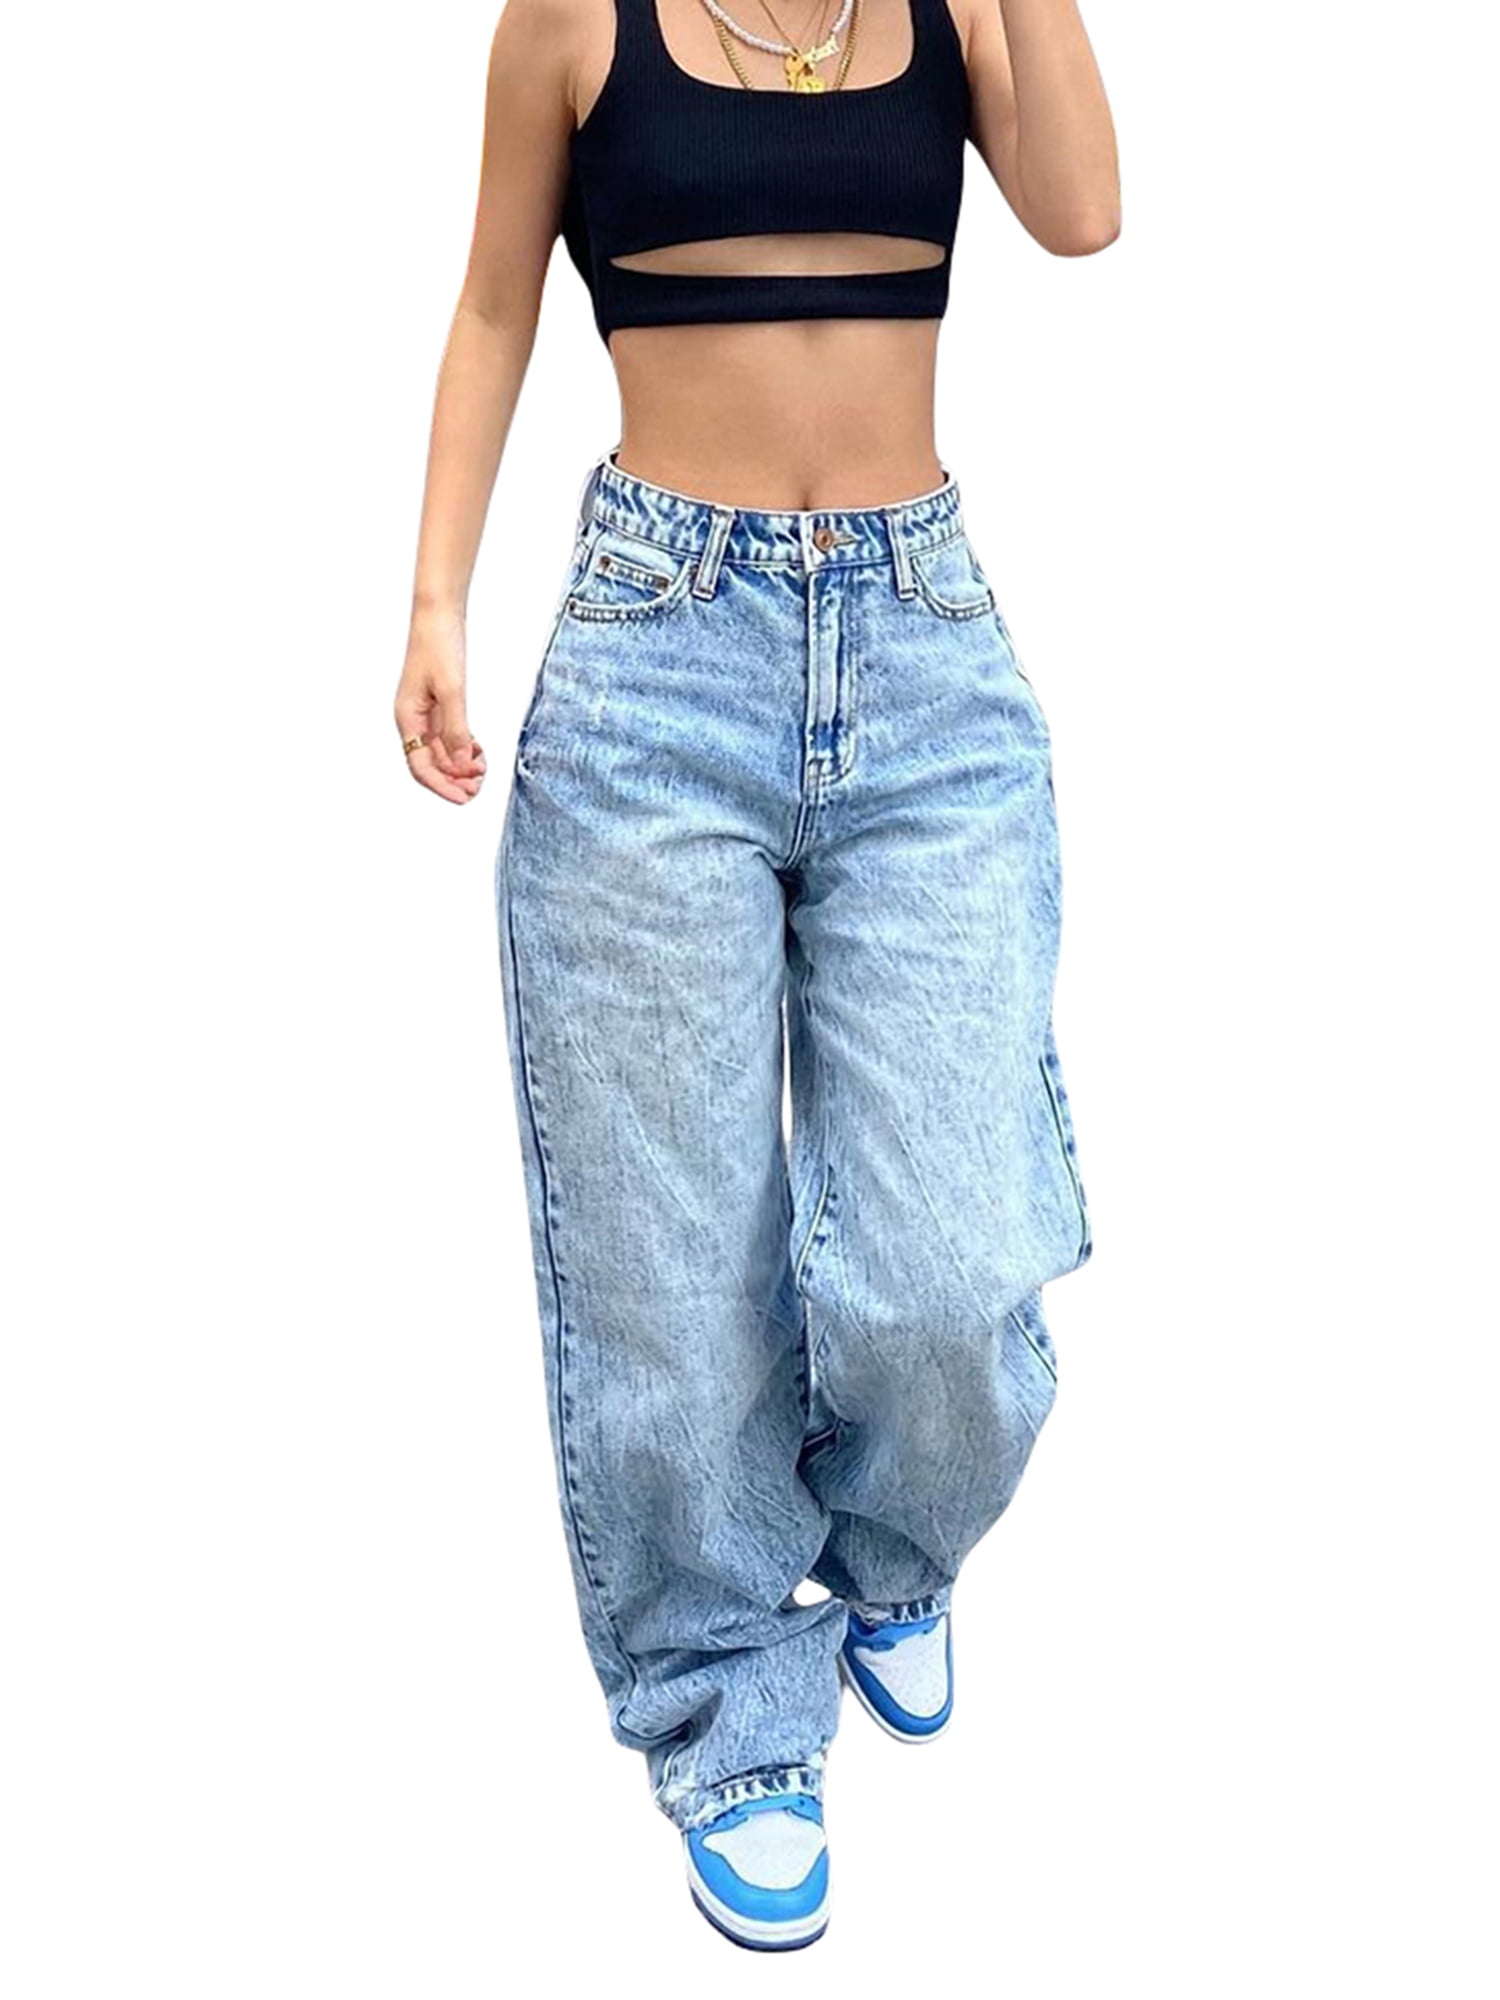 Women Jeans y2k Aesthetic Mid Waist Loose Baggy Trousers 2000s Denim Pants Korean Cargo Pants Streetwear Walmart.com